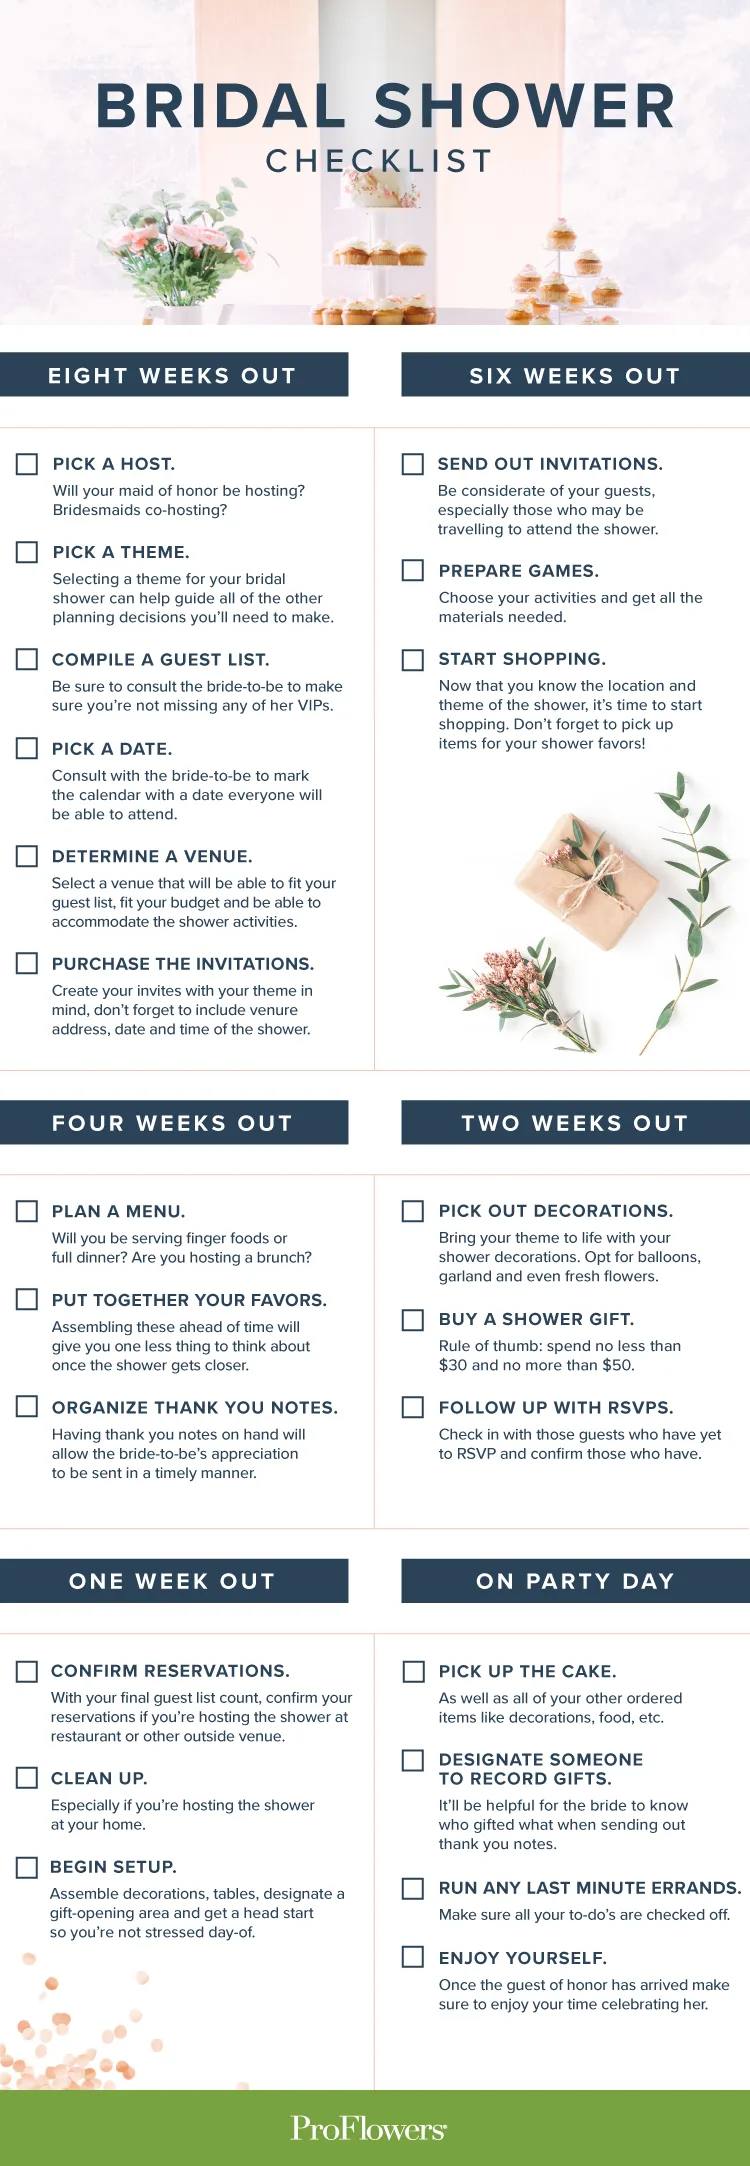 Bridal Shower Etiquette Guide and Checklist